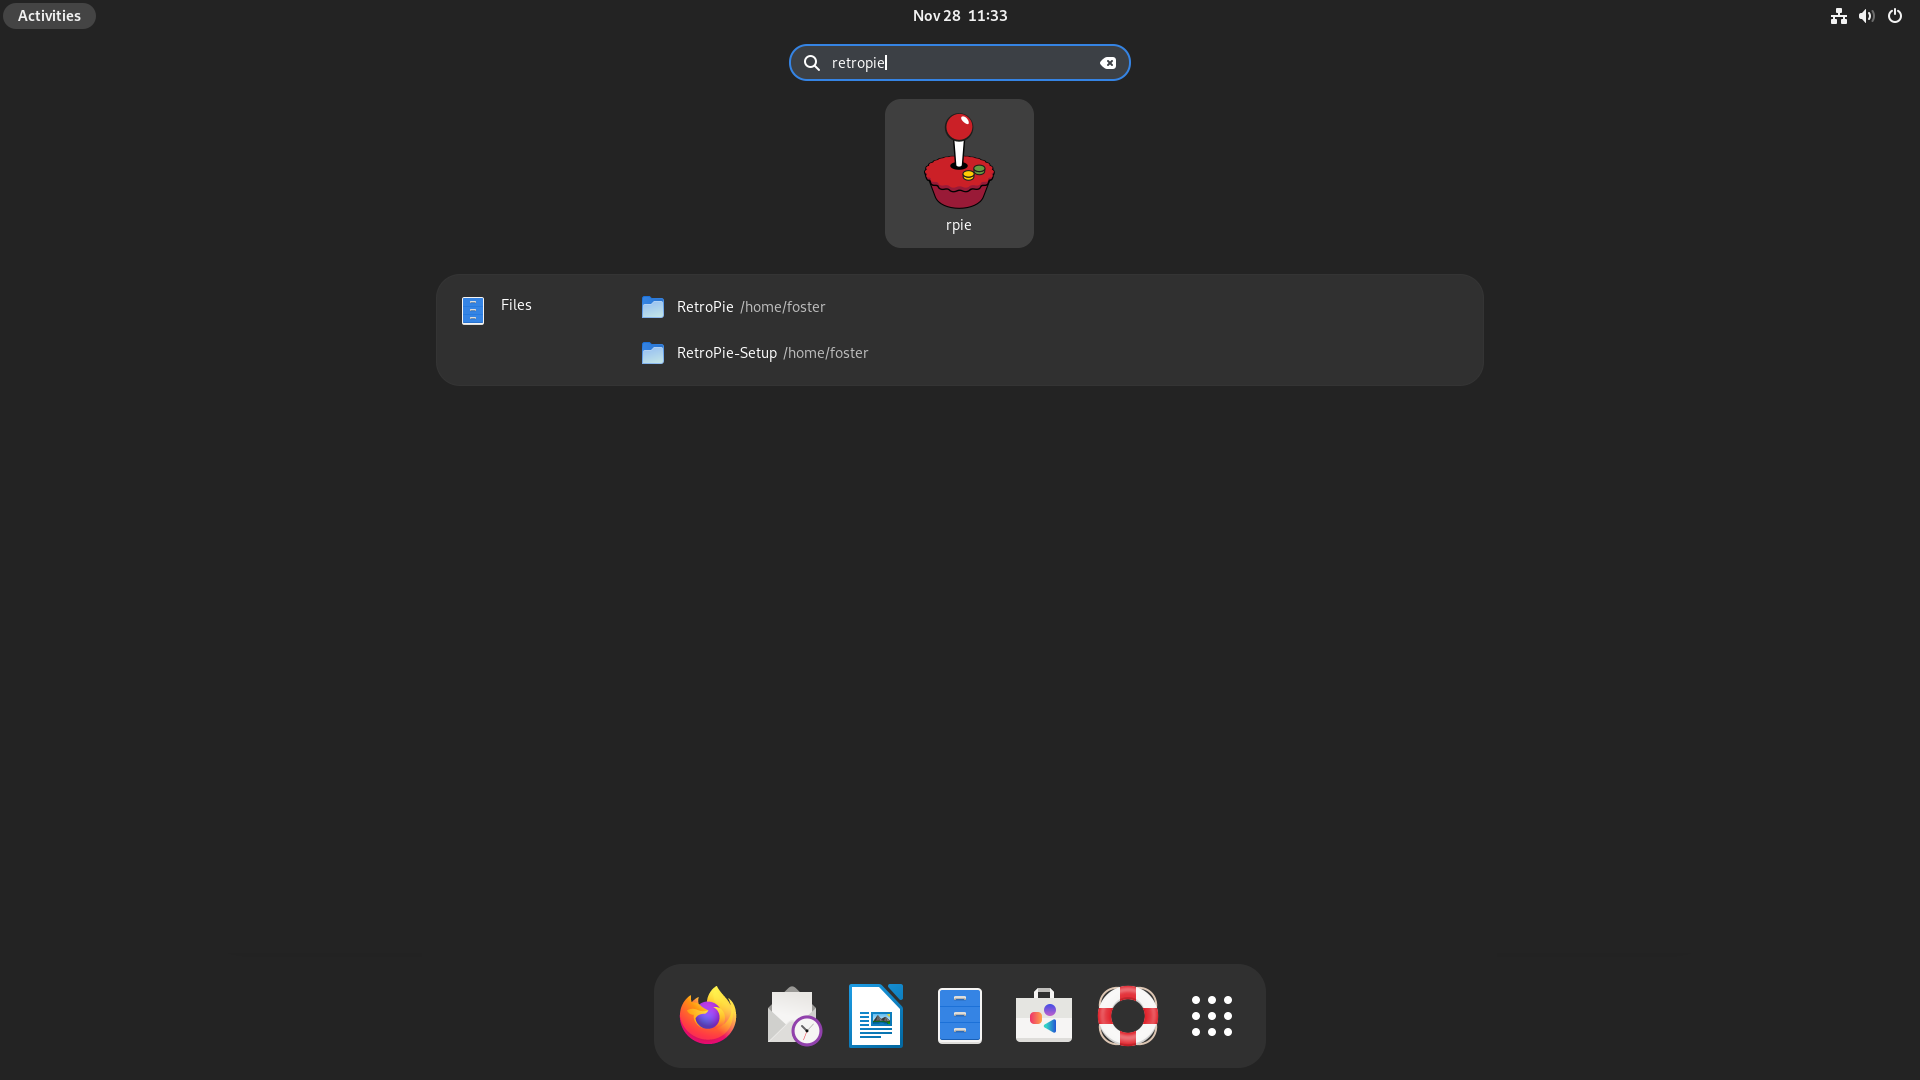 RetroPie on the GNOME app dashboard